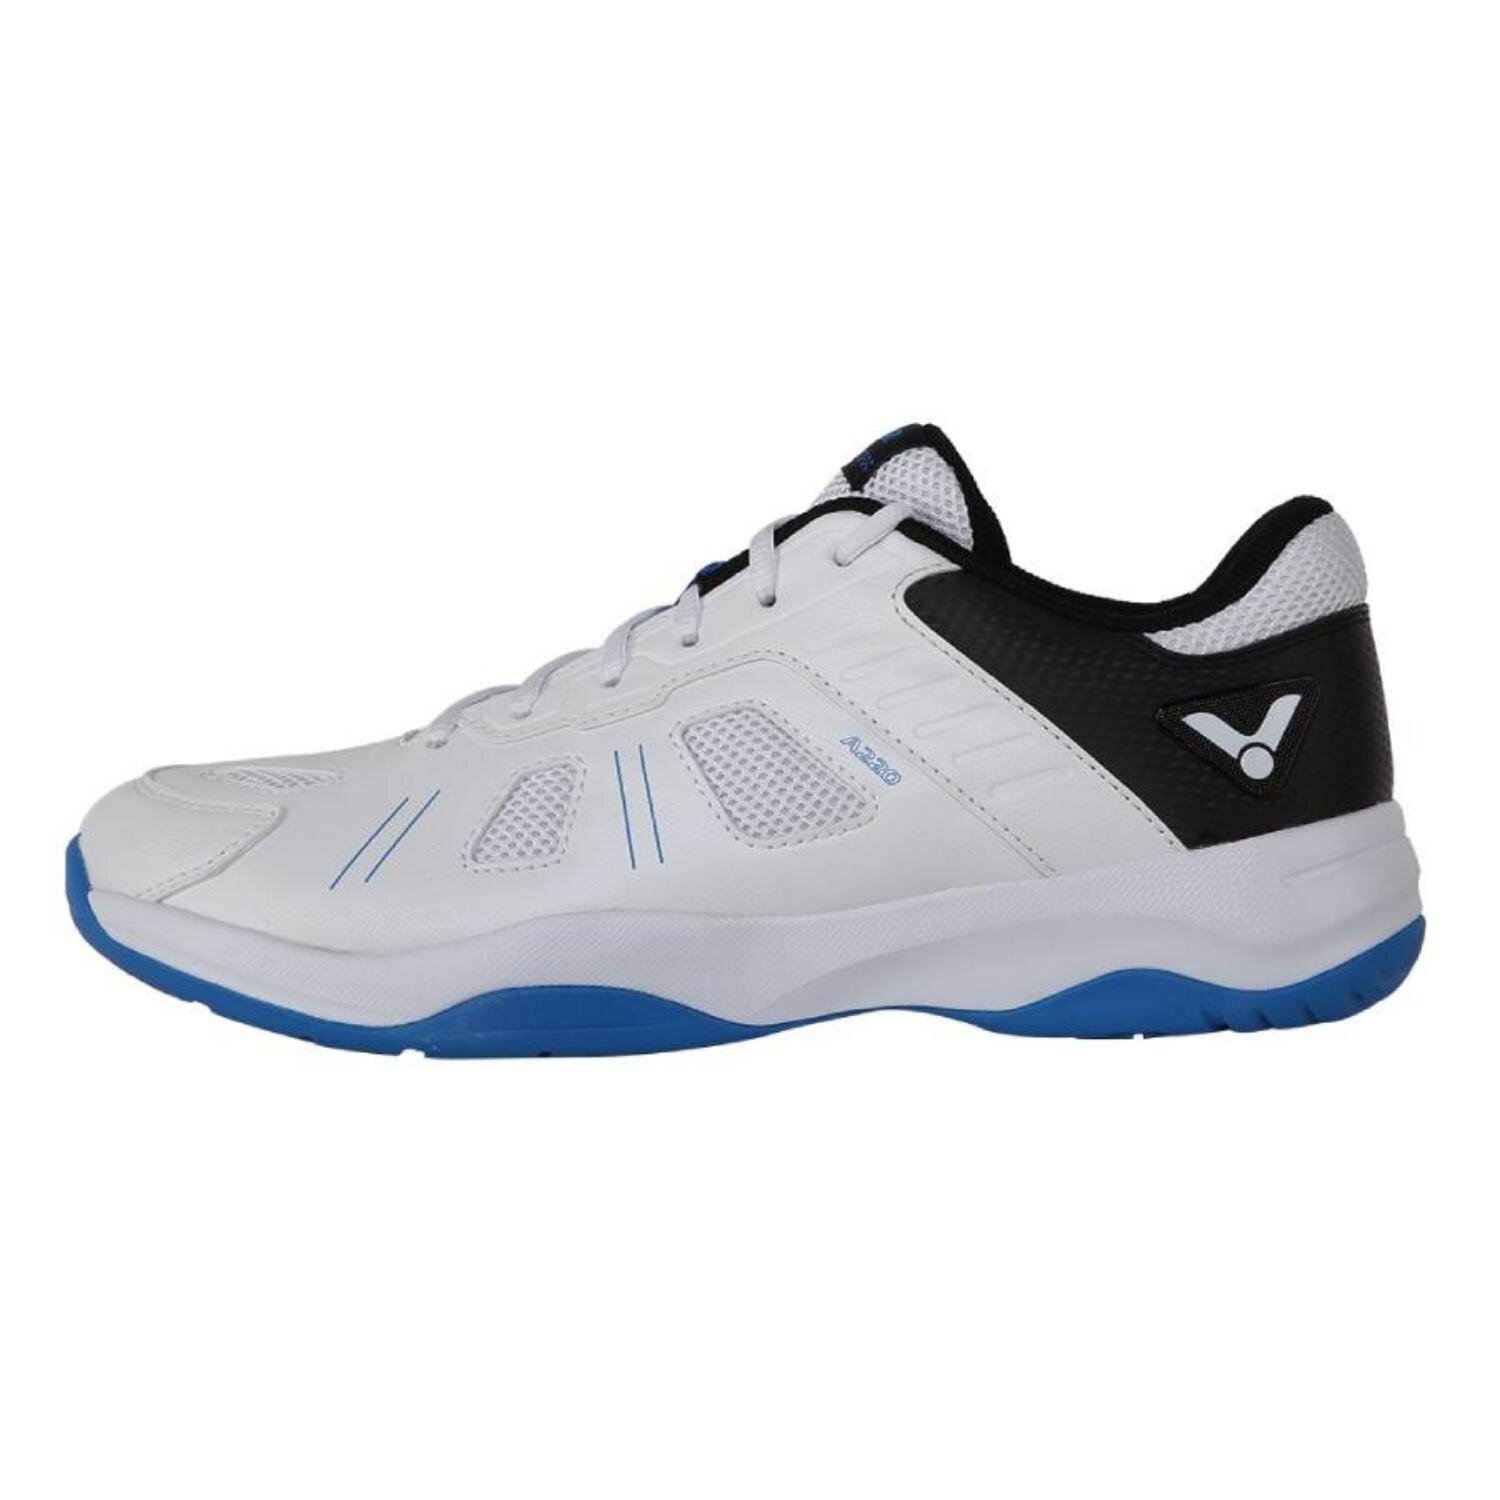 Victor A220 A | Badminton shoes men ⇒ Free shipping!